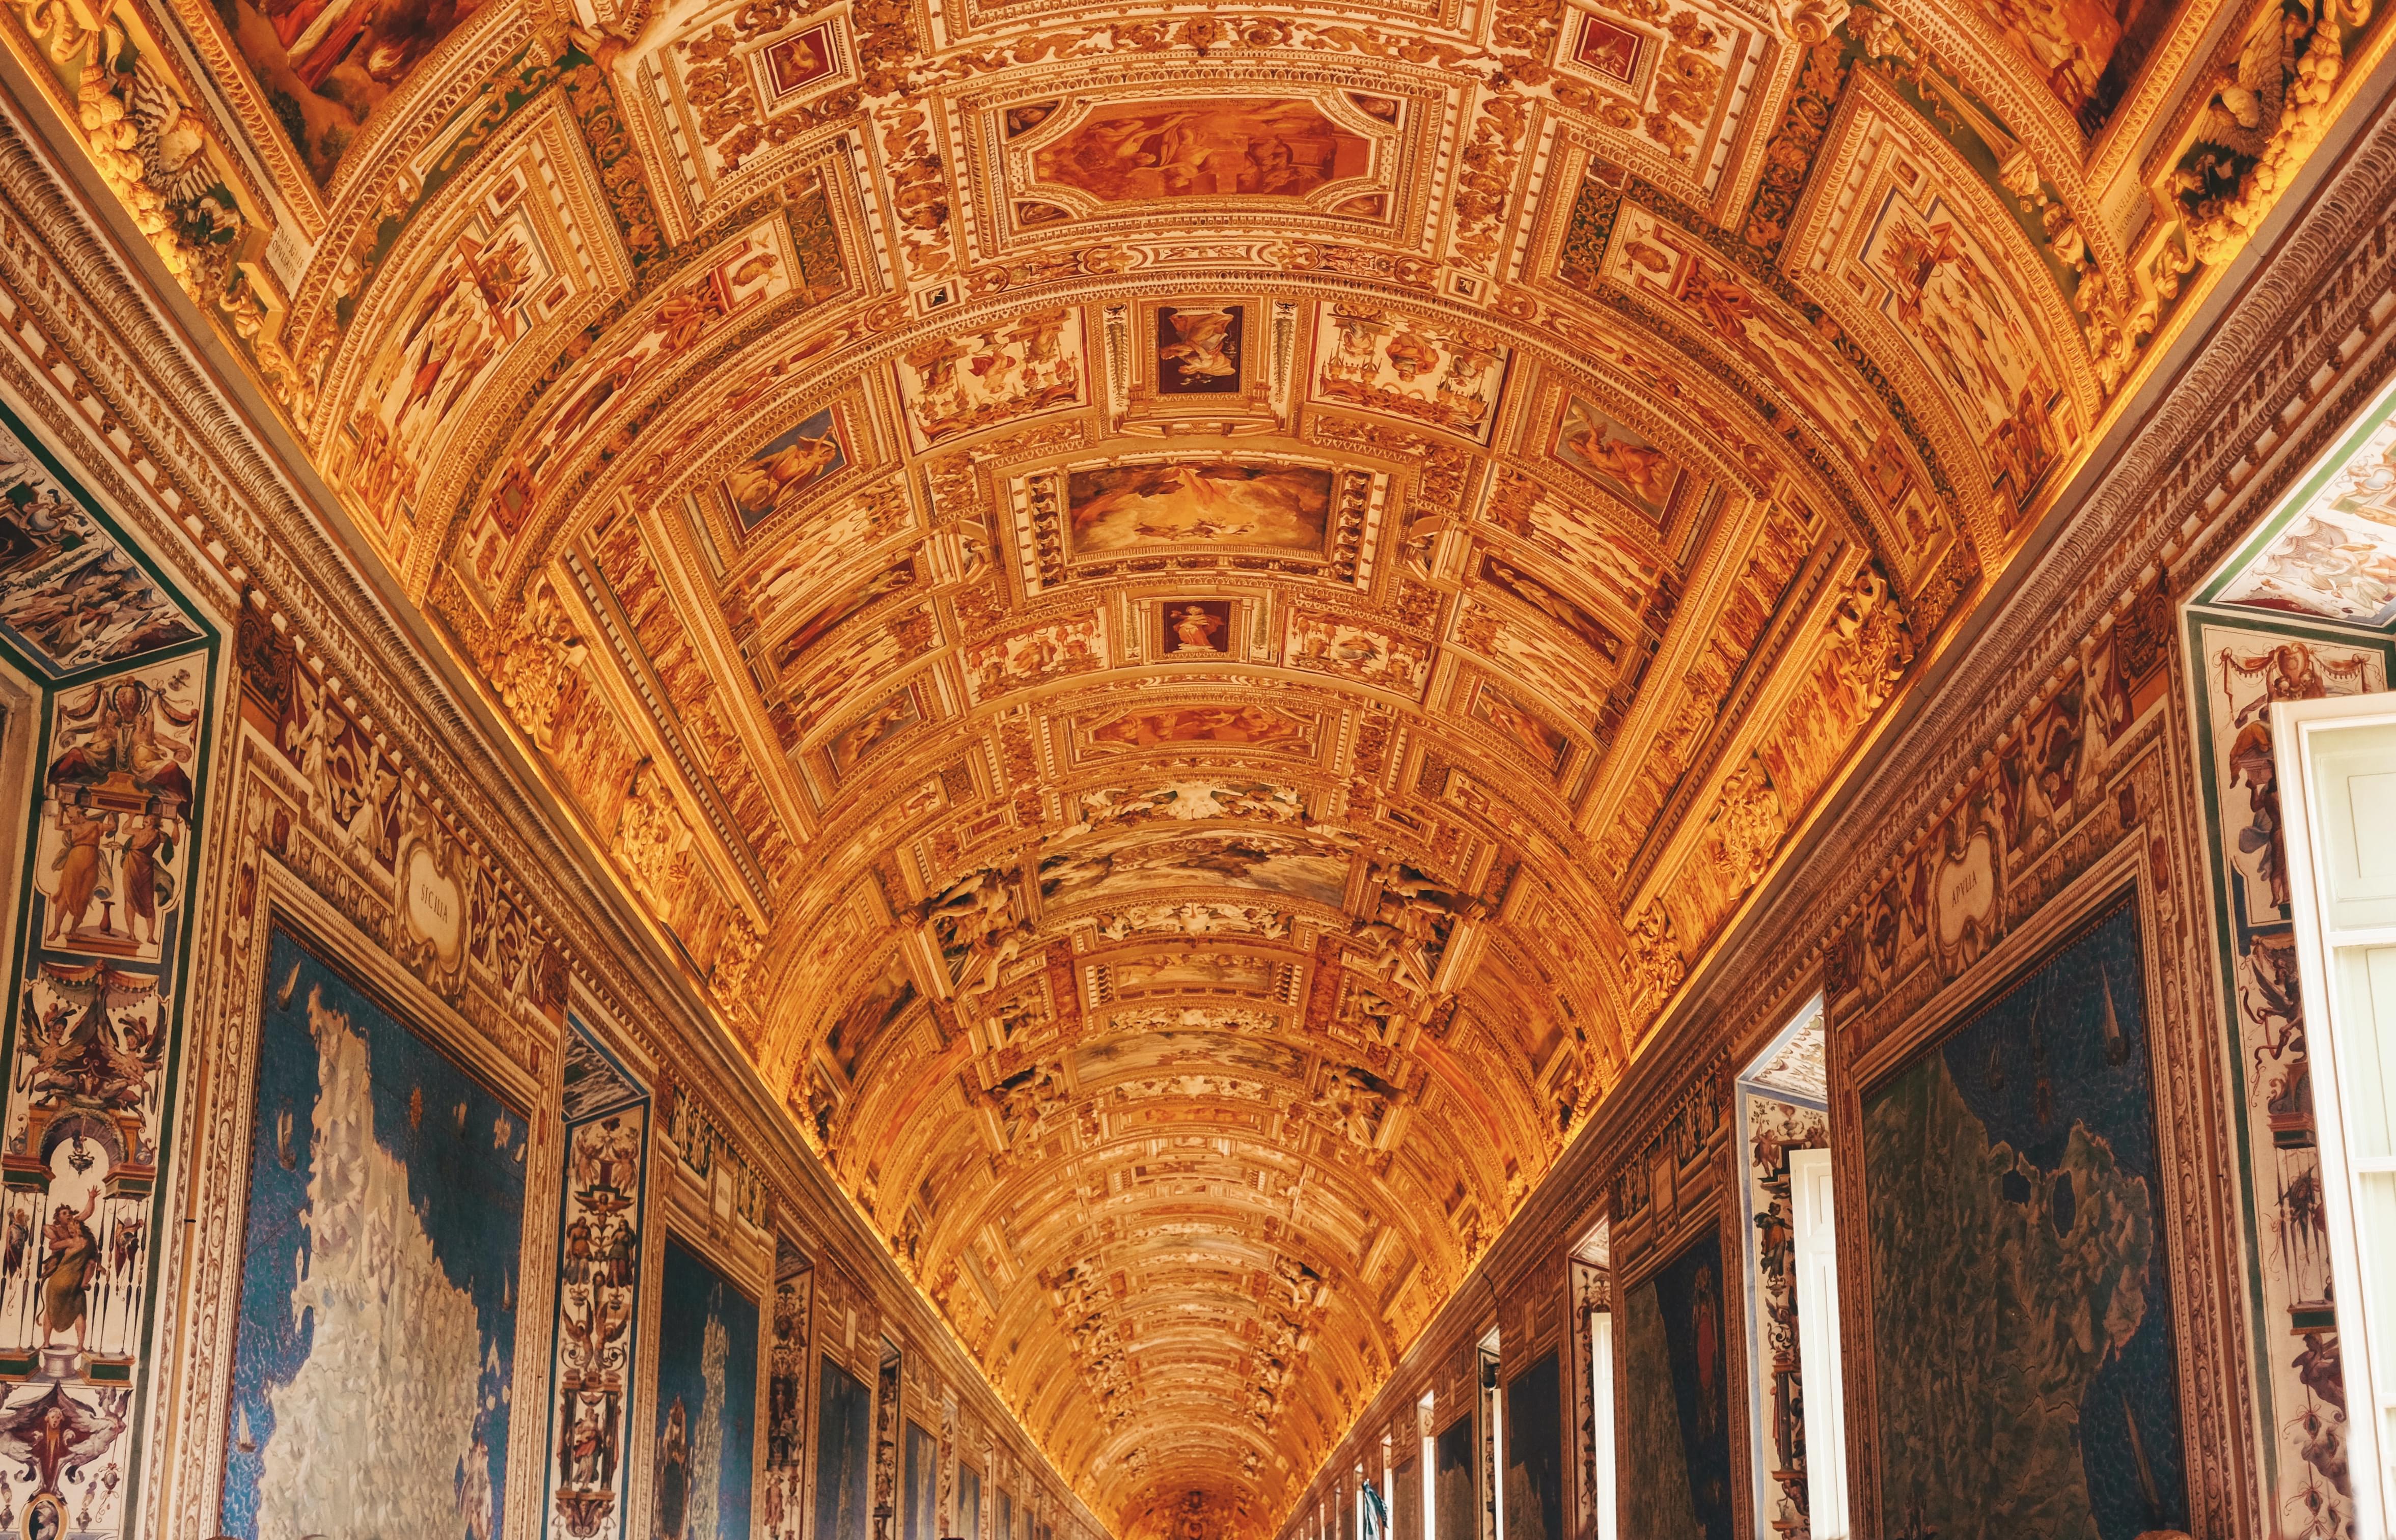 Gallery of Maps in Vatican Museums